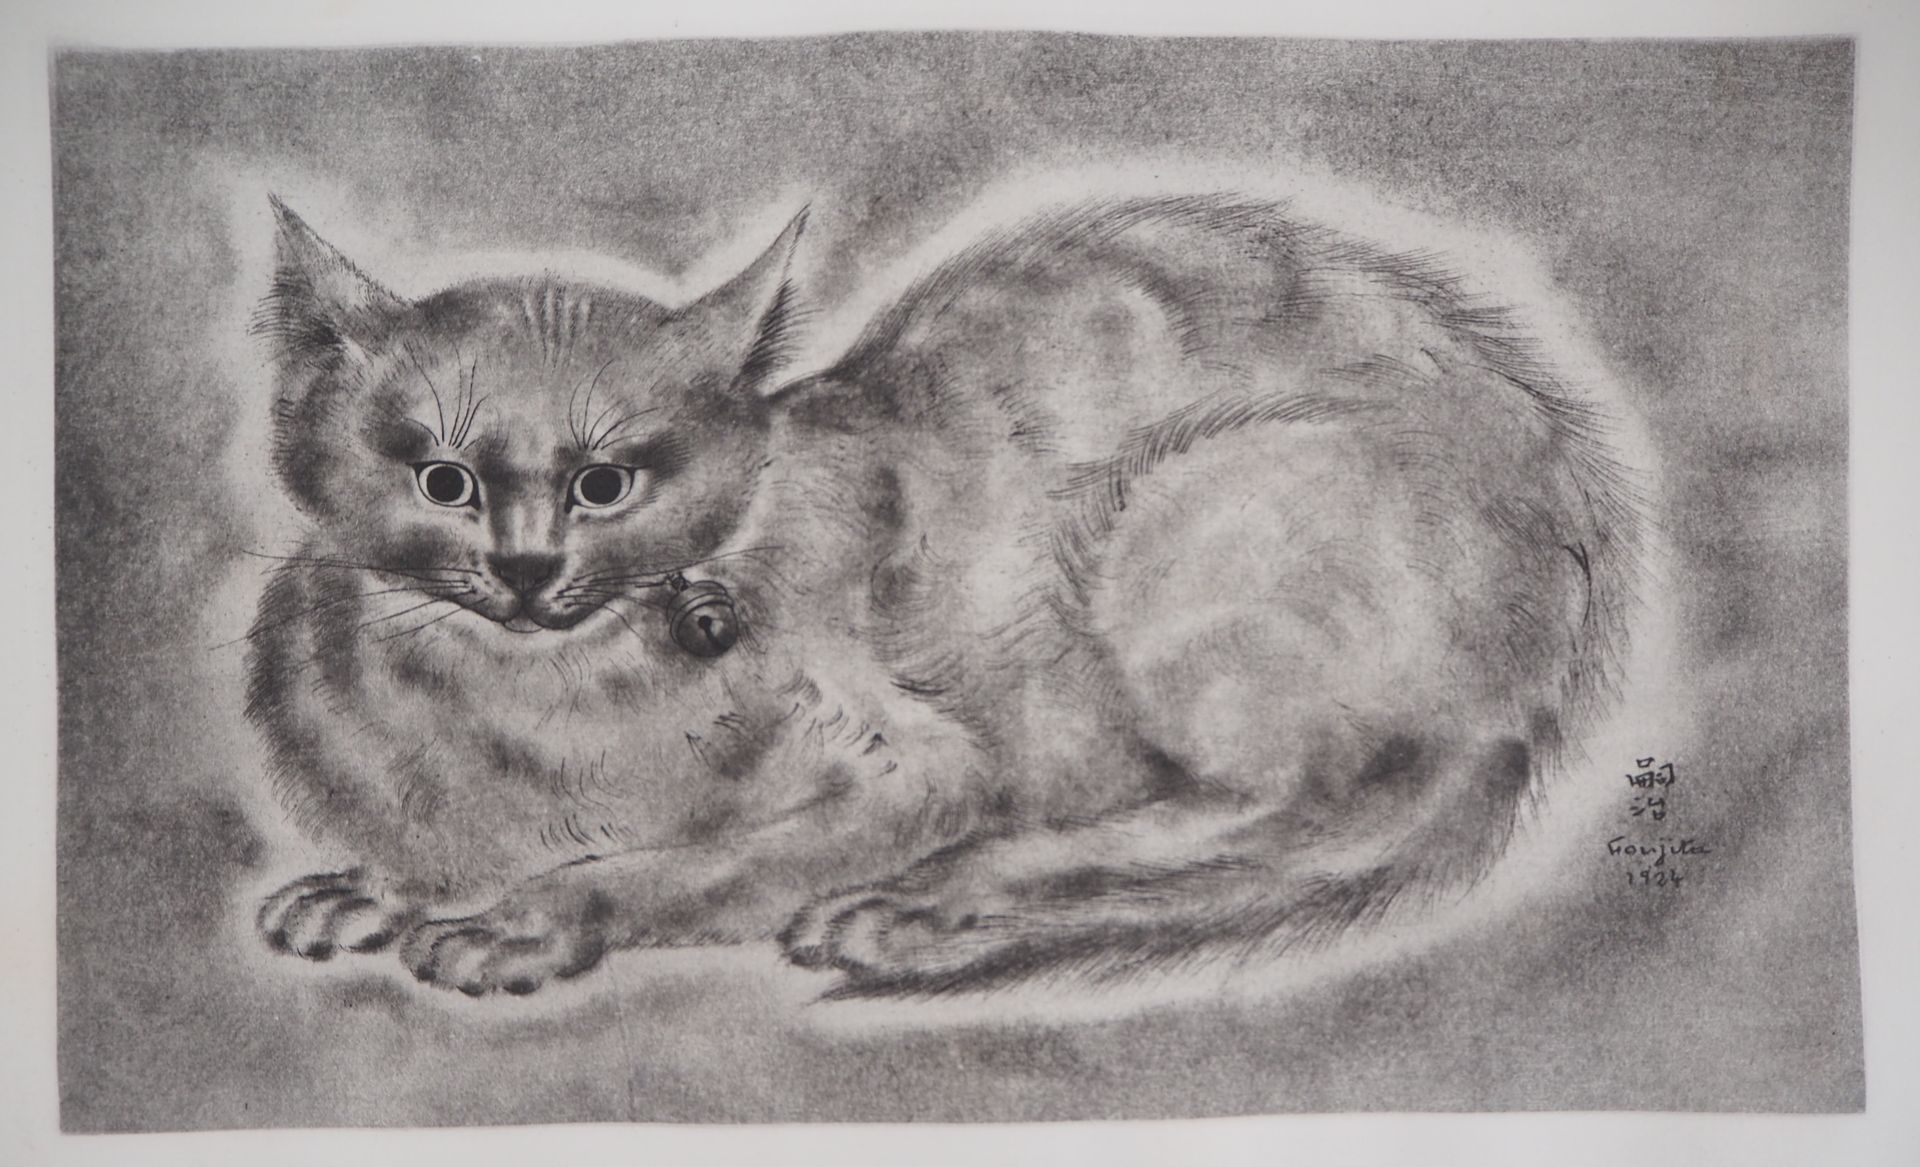 LÉONARD TSUGUHARU FOUJITA Leonard Tsuguharu FOUJITA

带铃铛的猫，1924年

原始蚀刻画（凹版背景上的蚀刻&hellip;